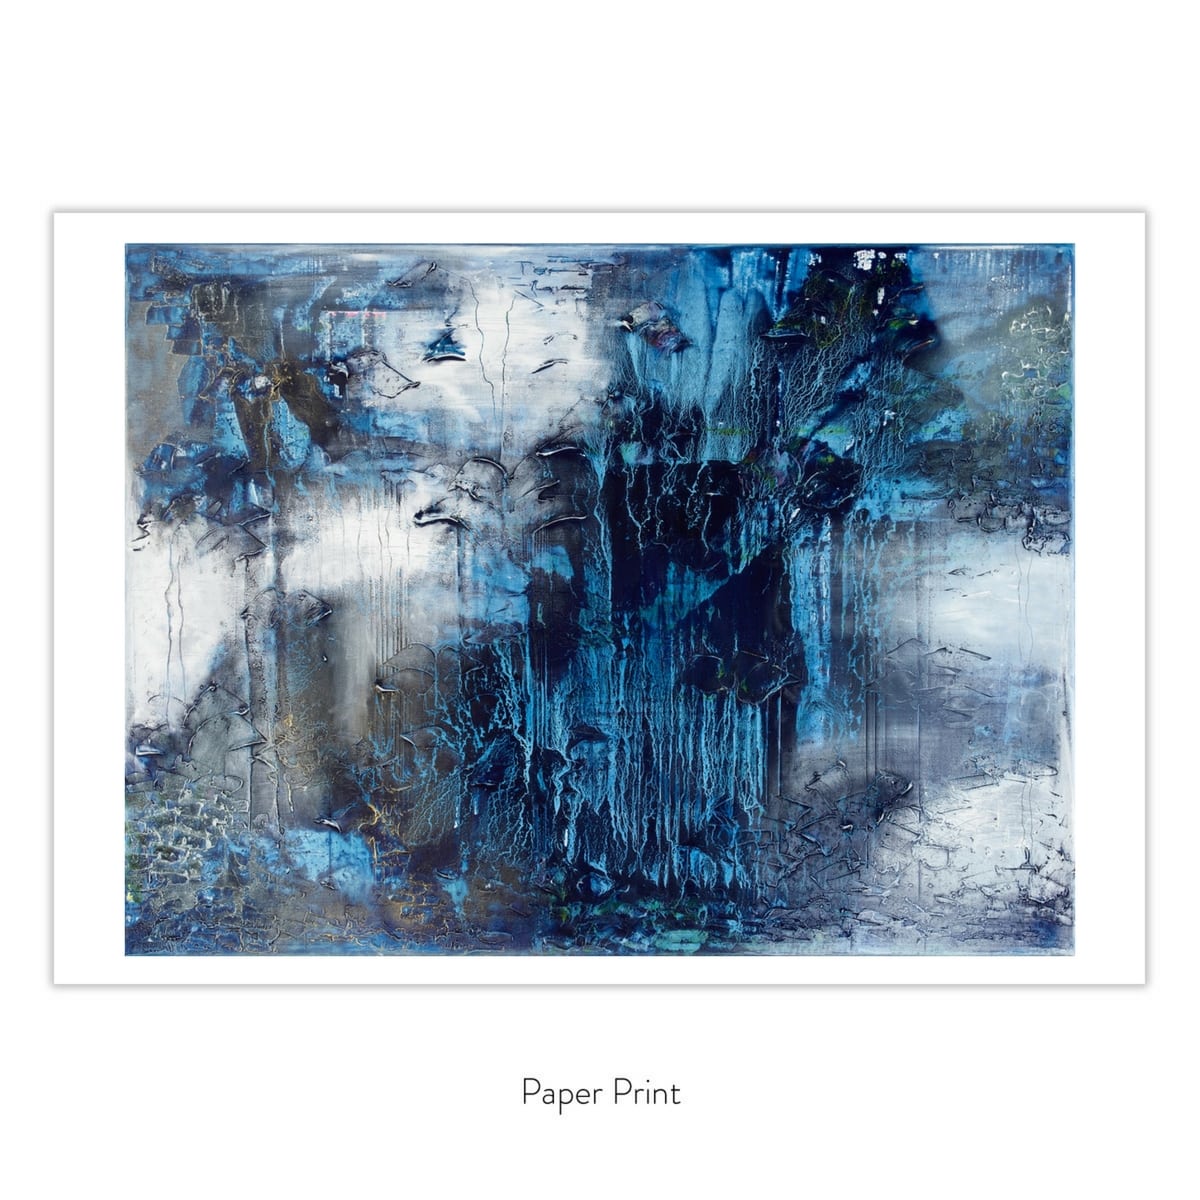 Jessica Zoob Contemporary fine art print - Deep Blue Magic 2 in paper print format